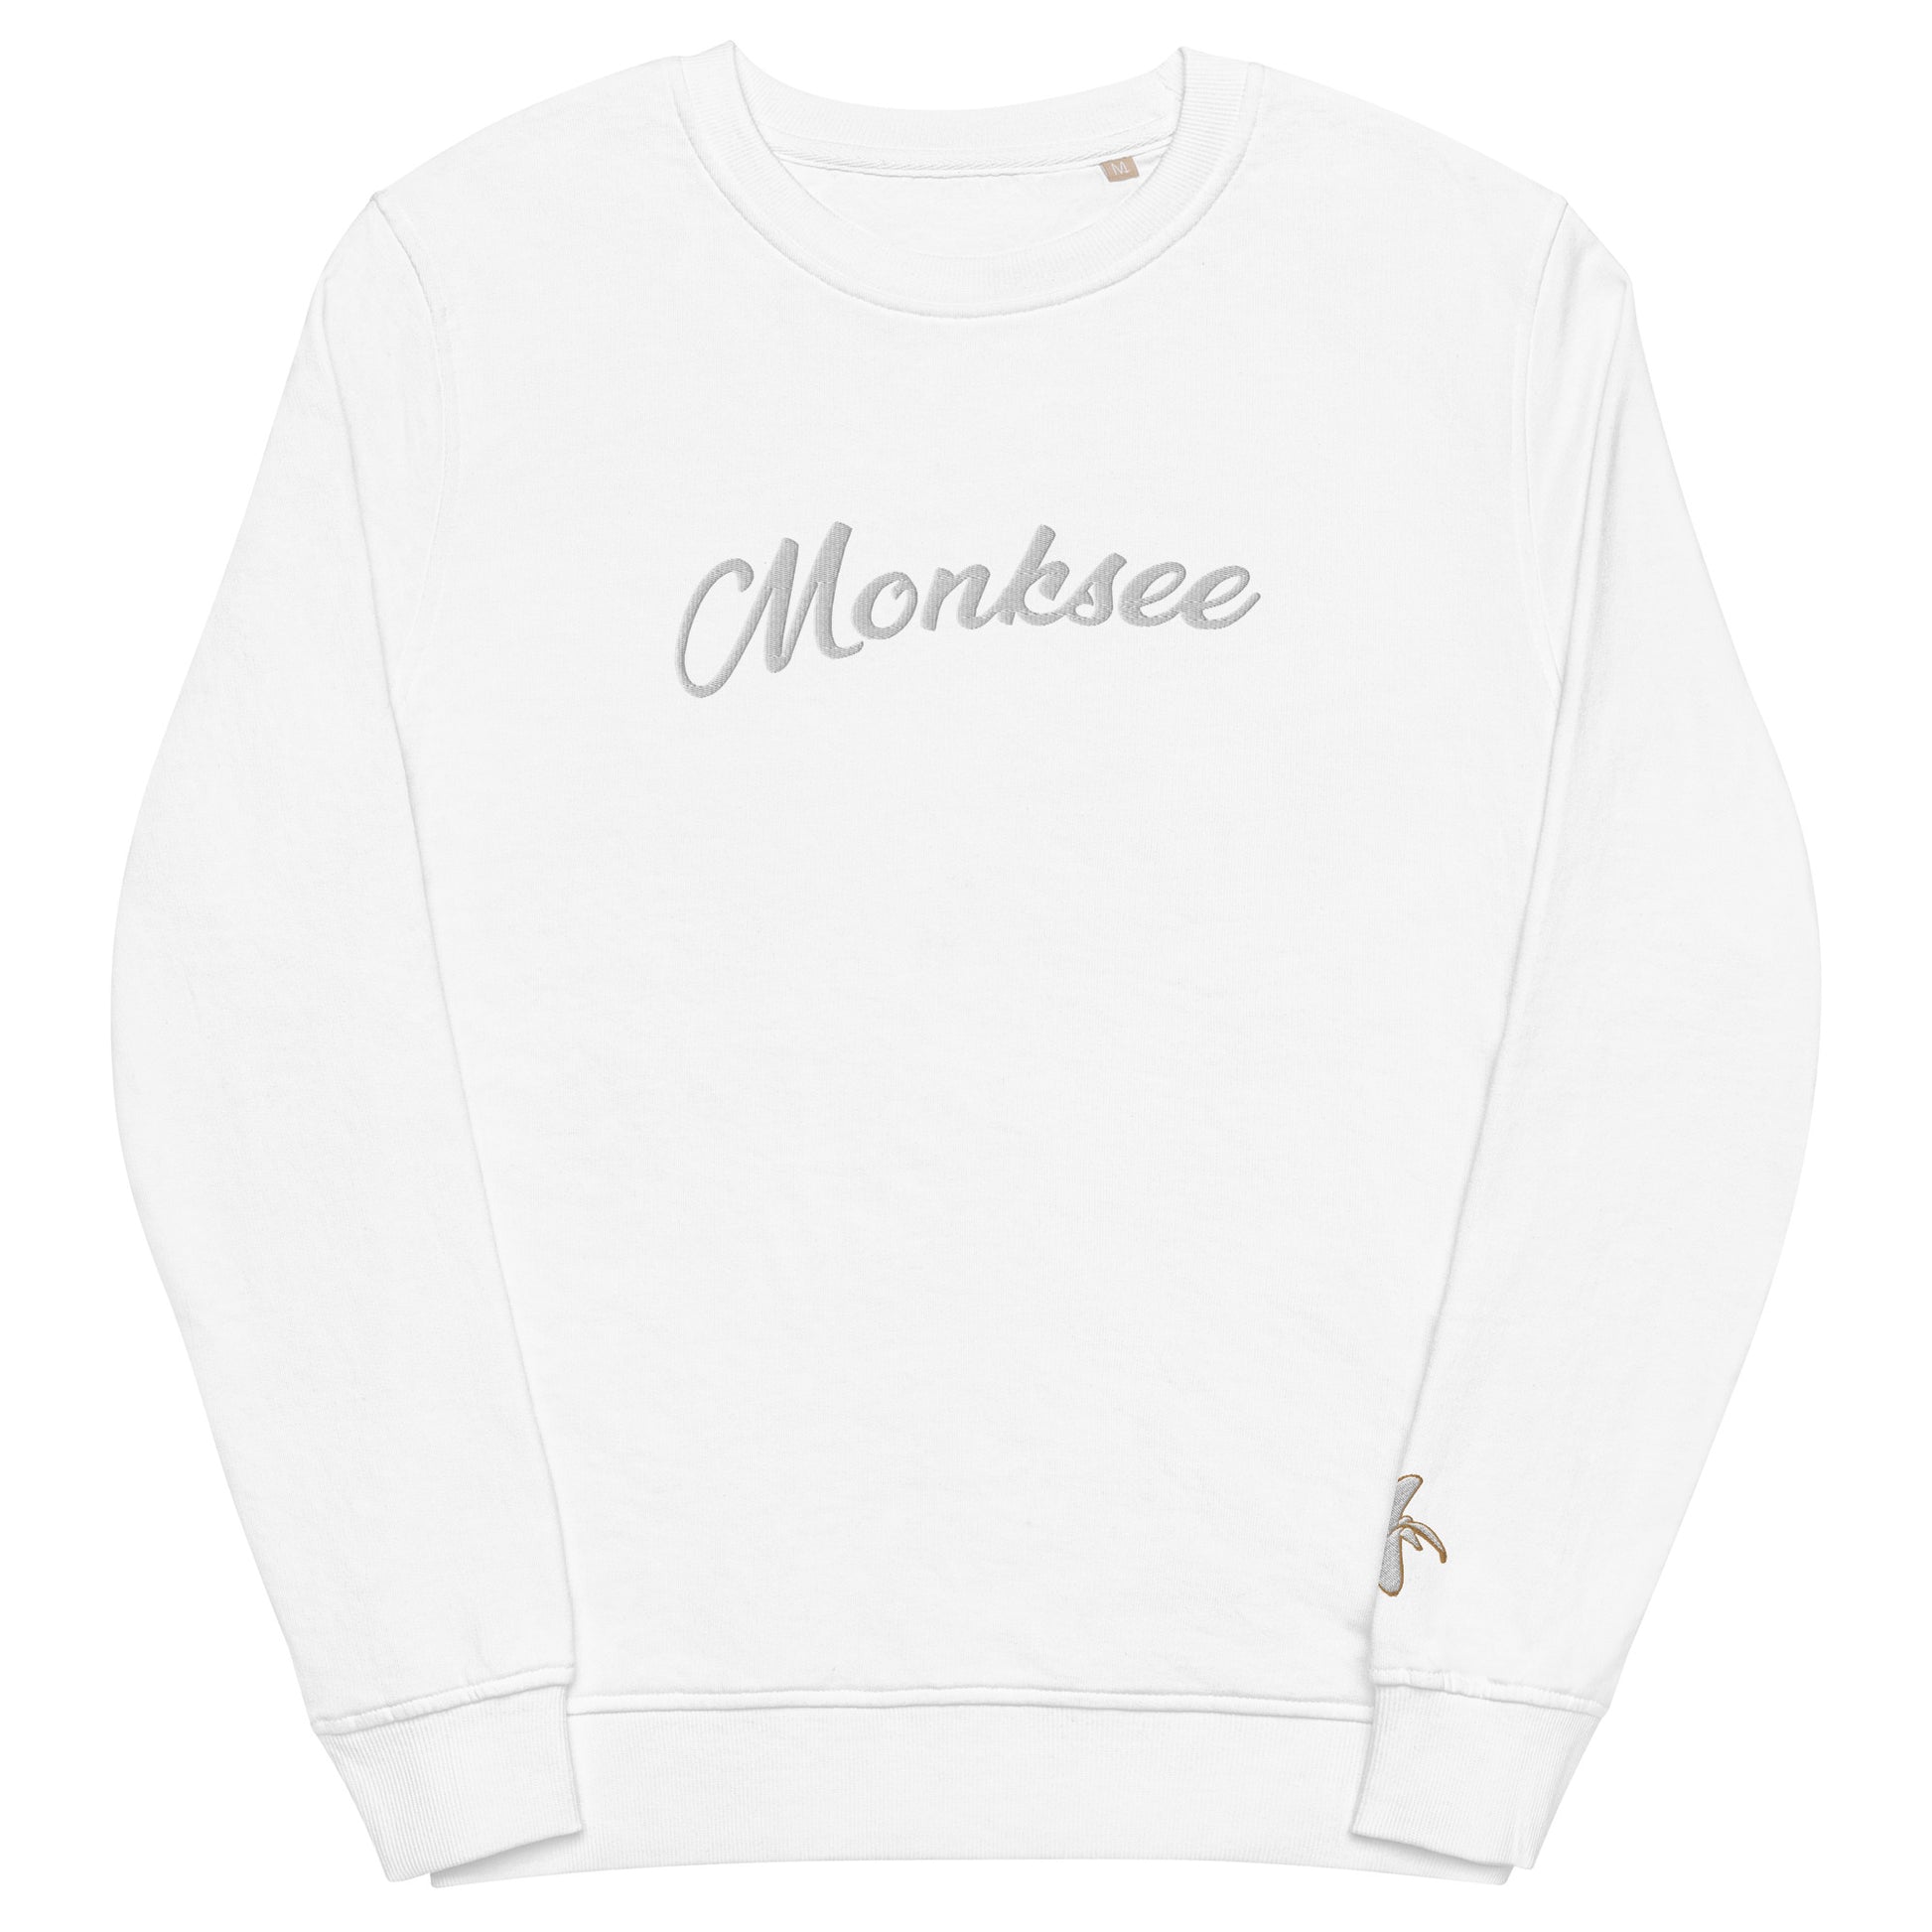 WhiteOut - Organic Monksee sweatshirt.